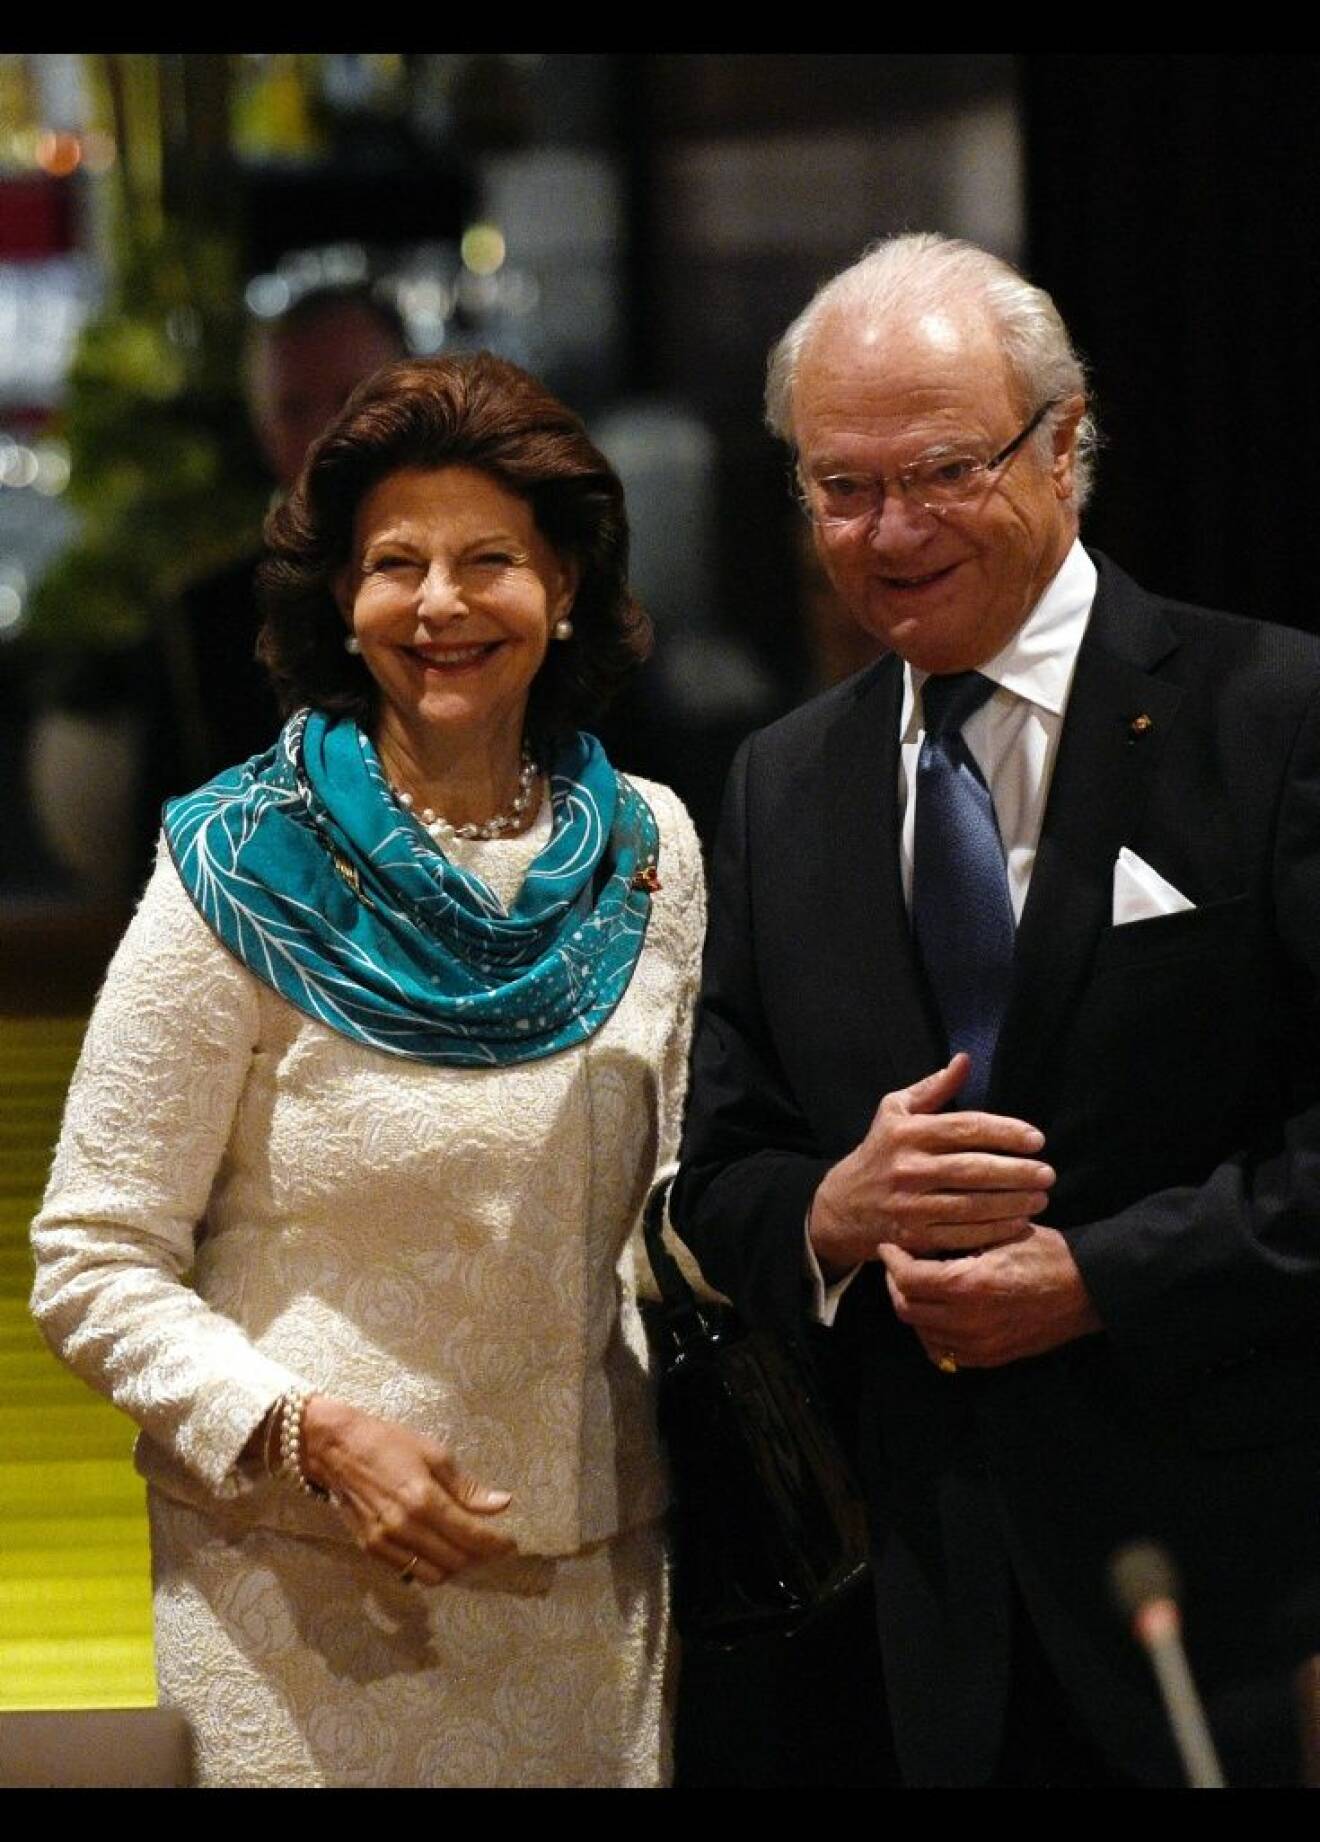 Swedish royal couple visit Germany - Berlin